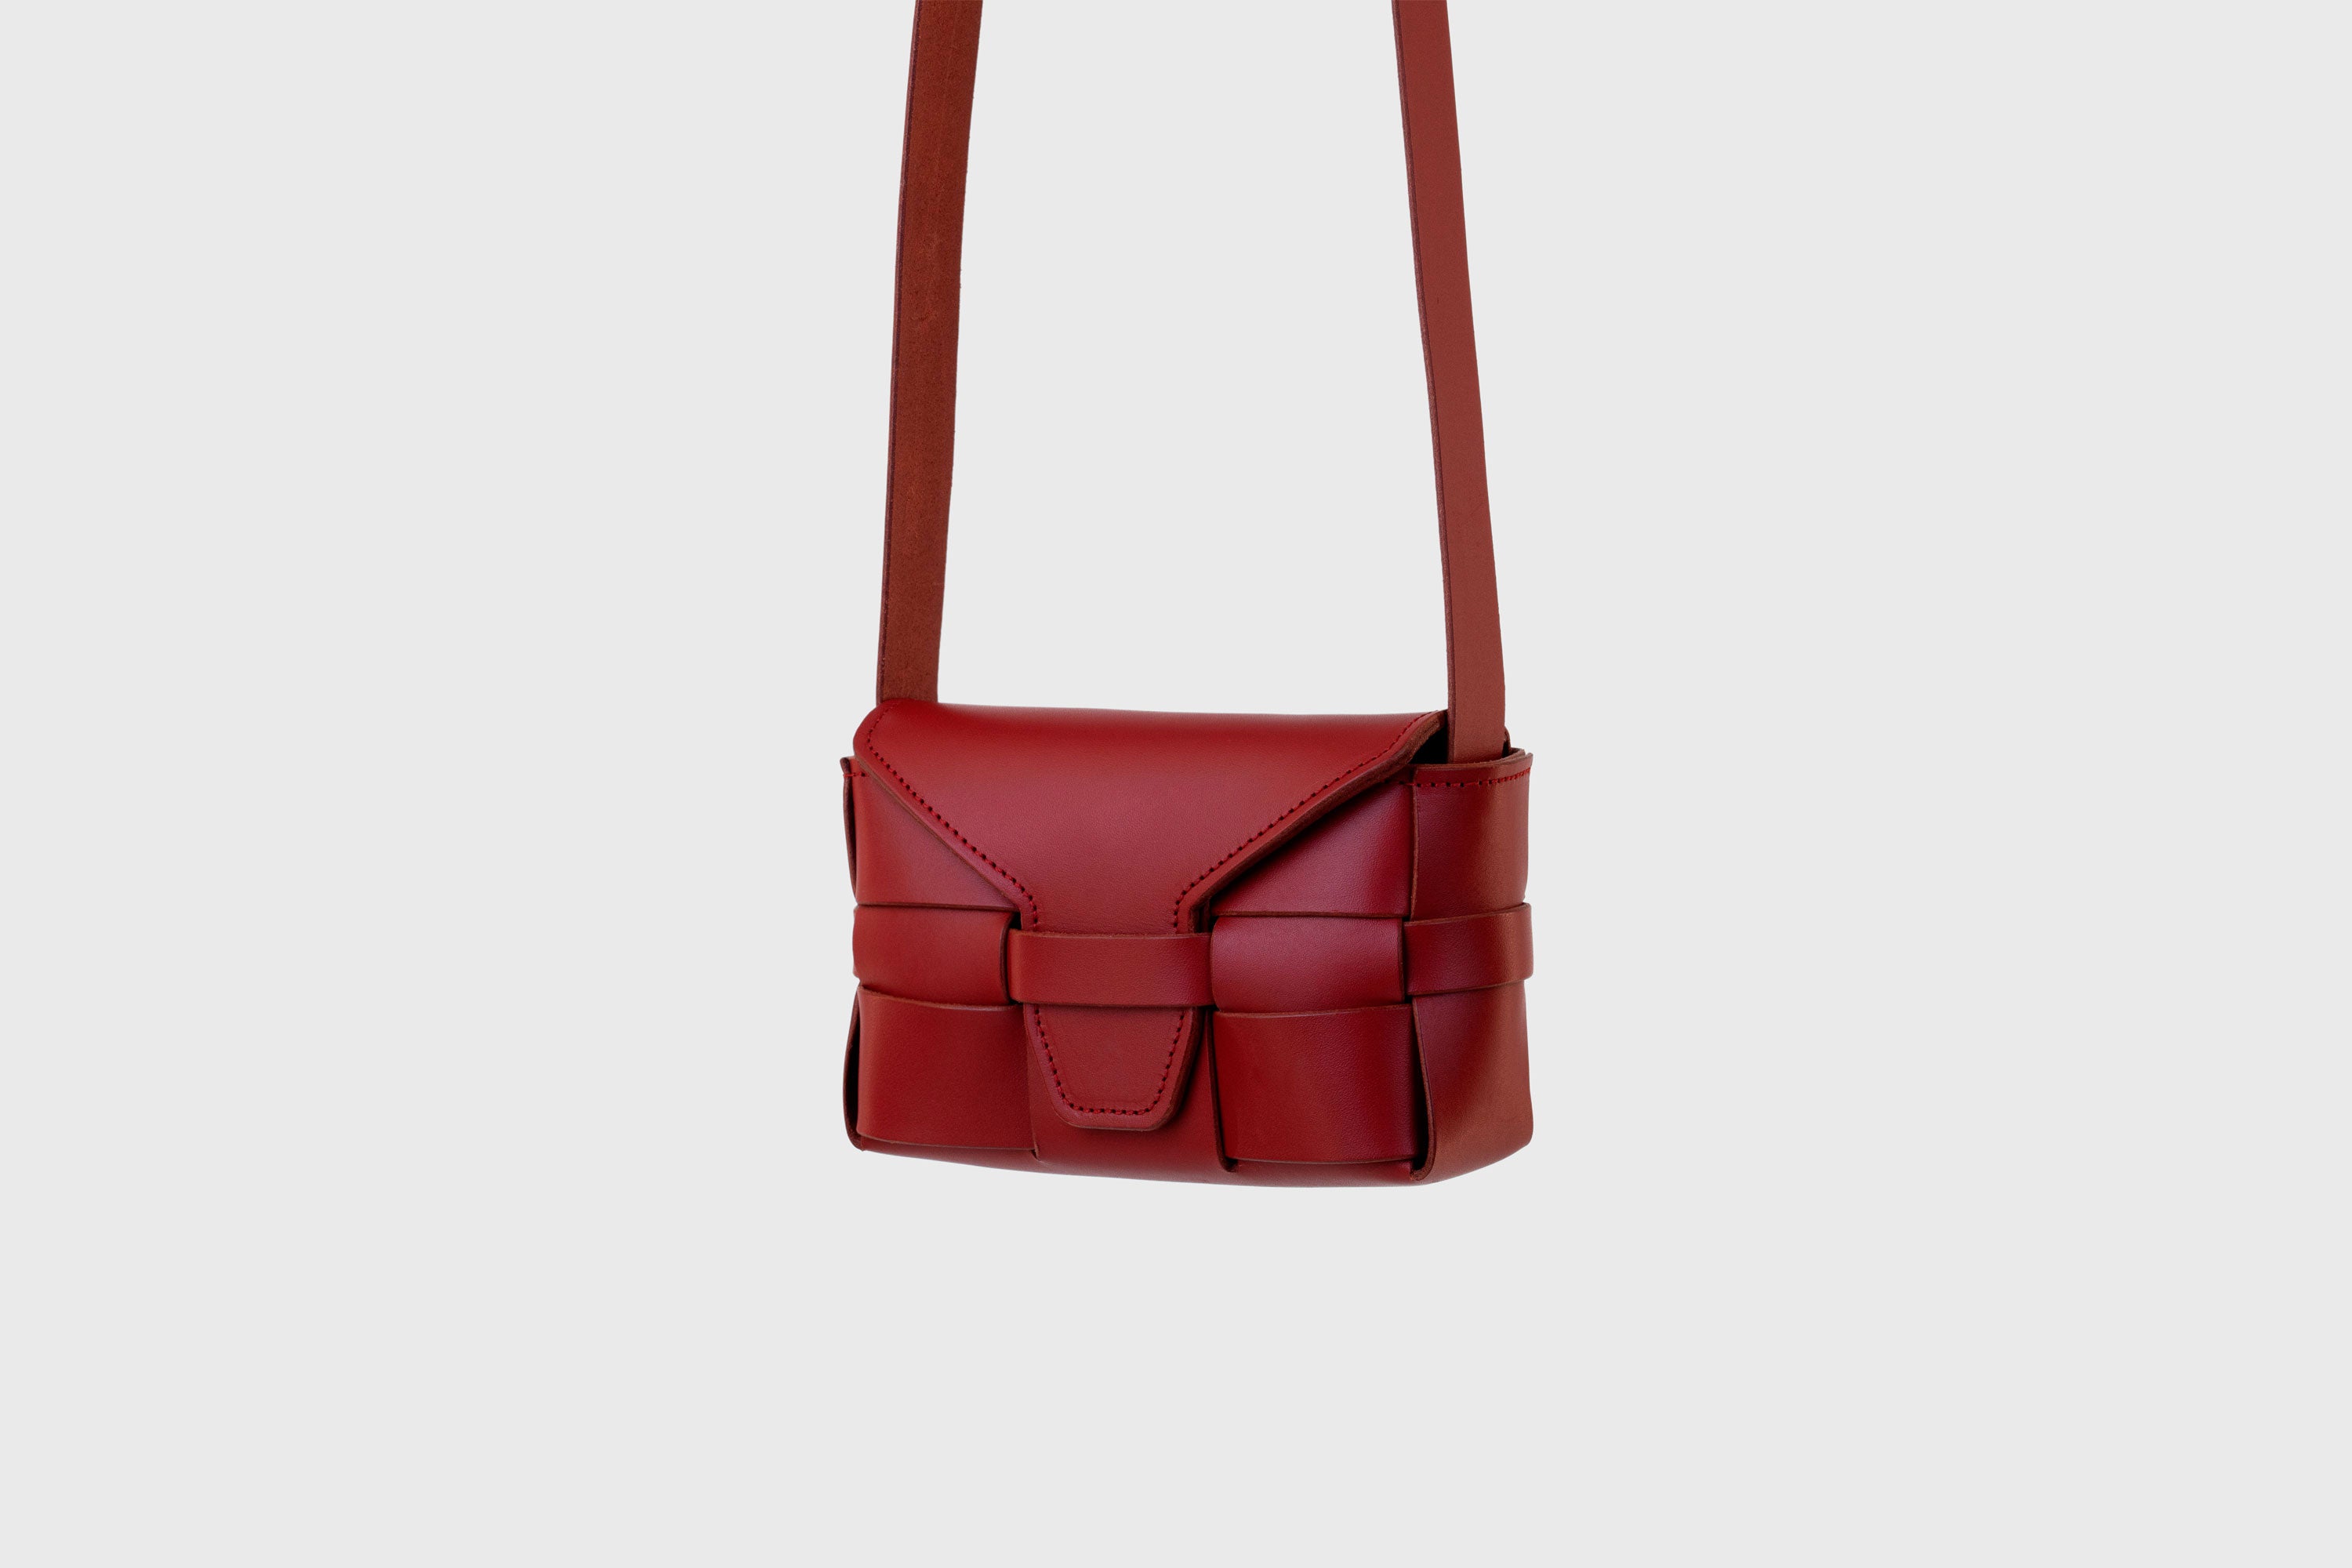 Woven Leather Bag Saka Small Red Braided Shoulder Bag Crossbody Vegetable Tanned Premium Quality Modern Minimalistic Design Atelier Madre Manuel Dreesmann Barcelona